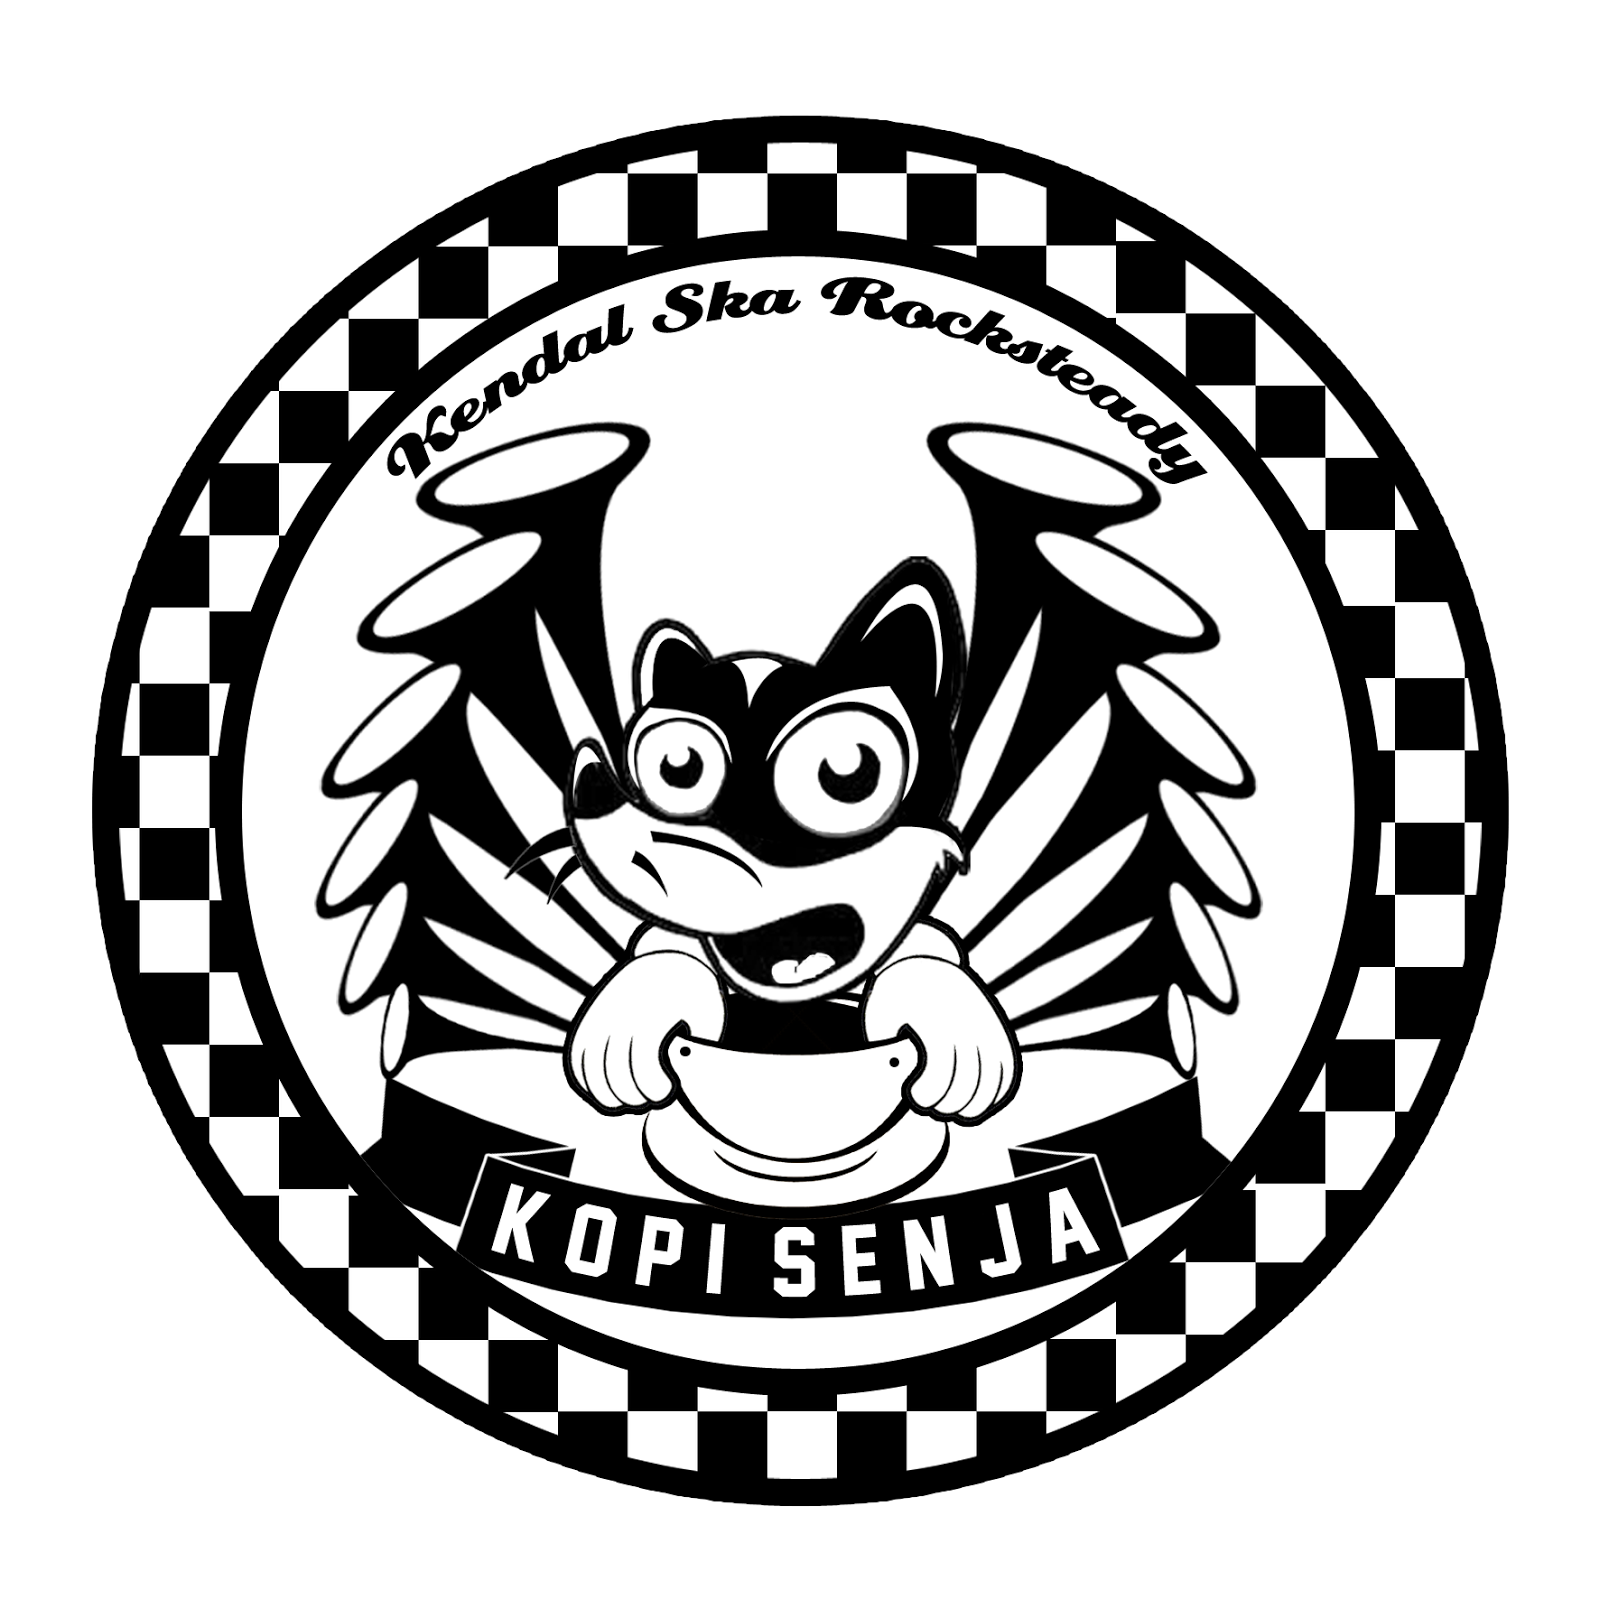 Desain Logo Kopi  Senja Band Kendal Sense Side